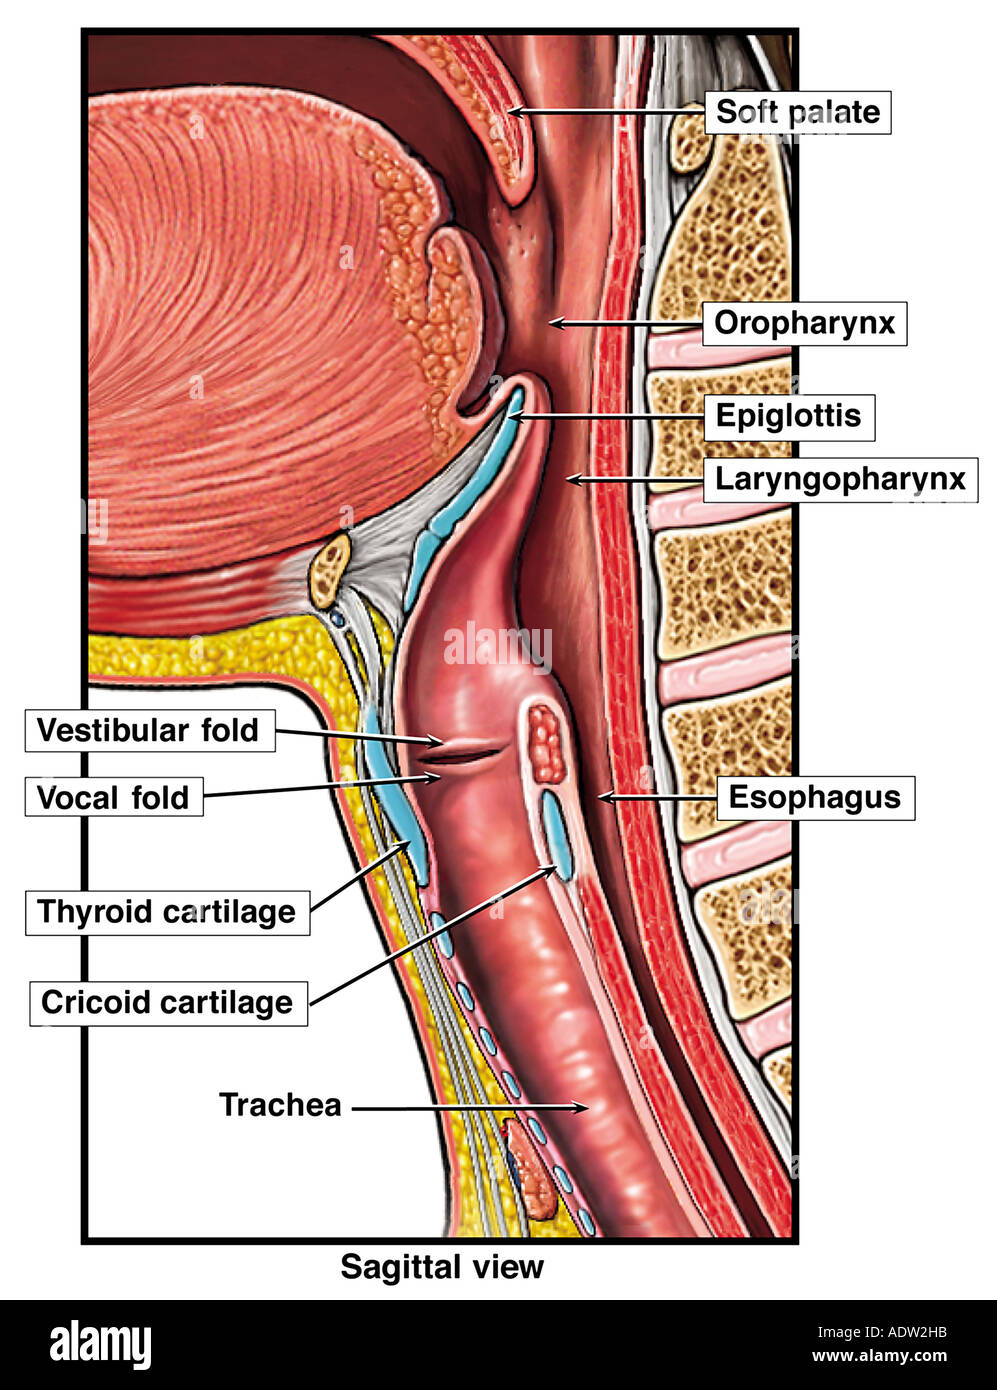 Anatomy Of The Trachea And Esophagus